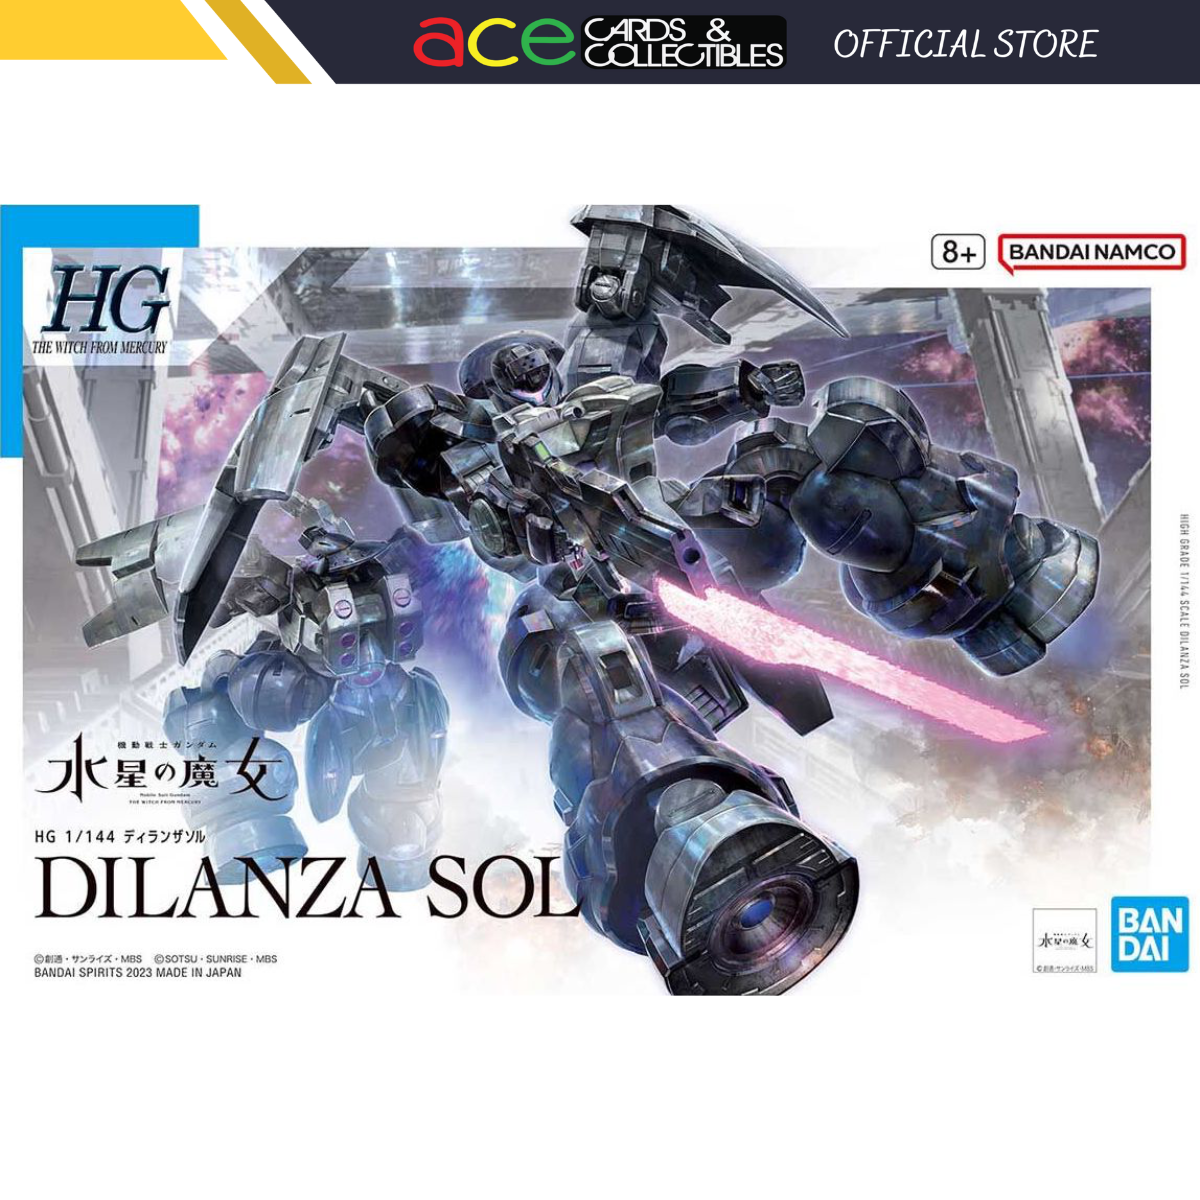 Gunpla HG 1/144 "Dilanza Sol"-Bandai-Ace Cards & Collectibles